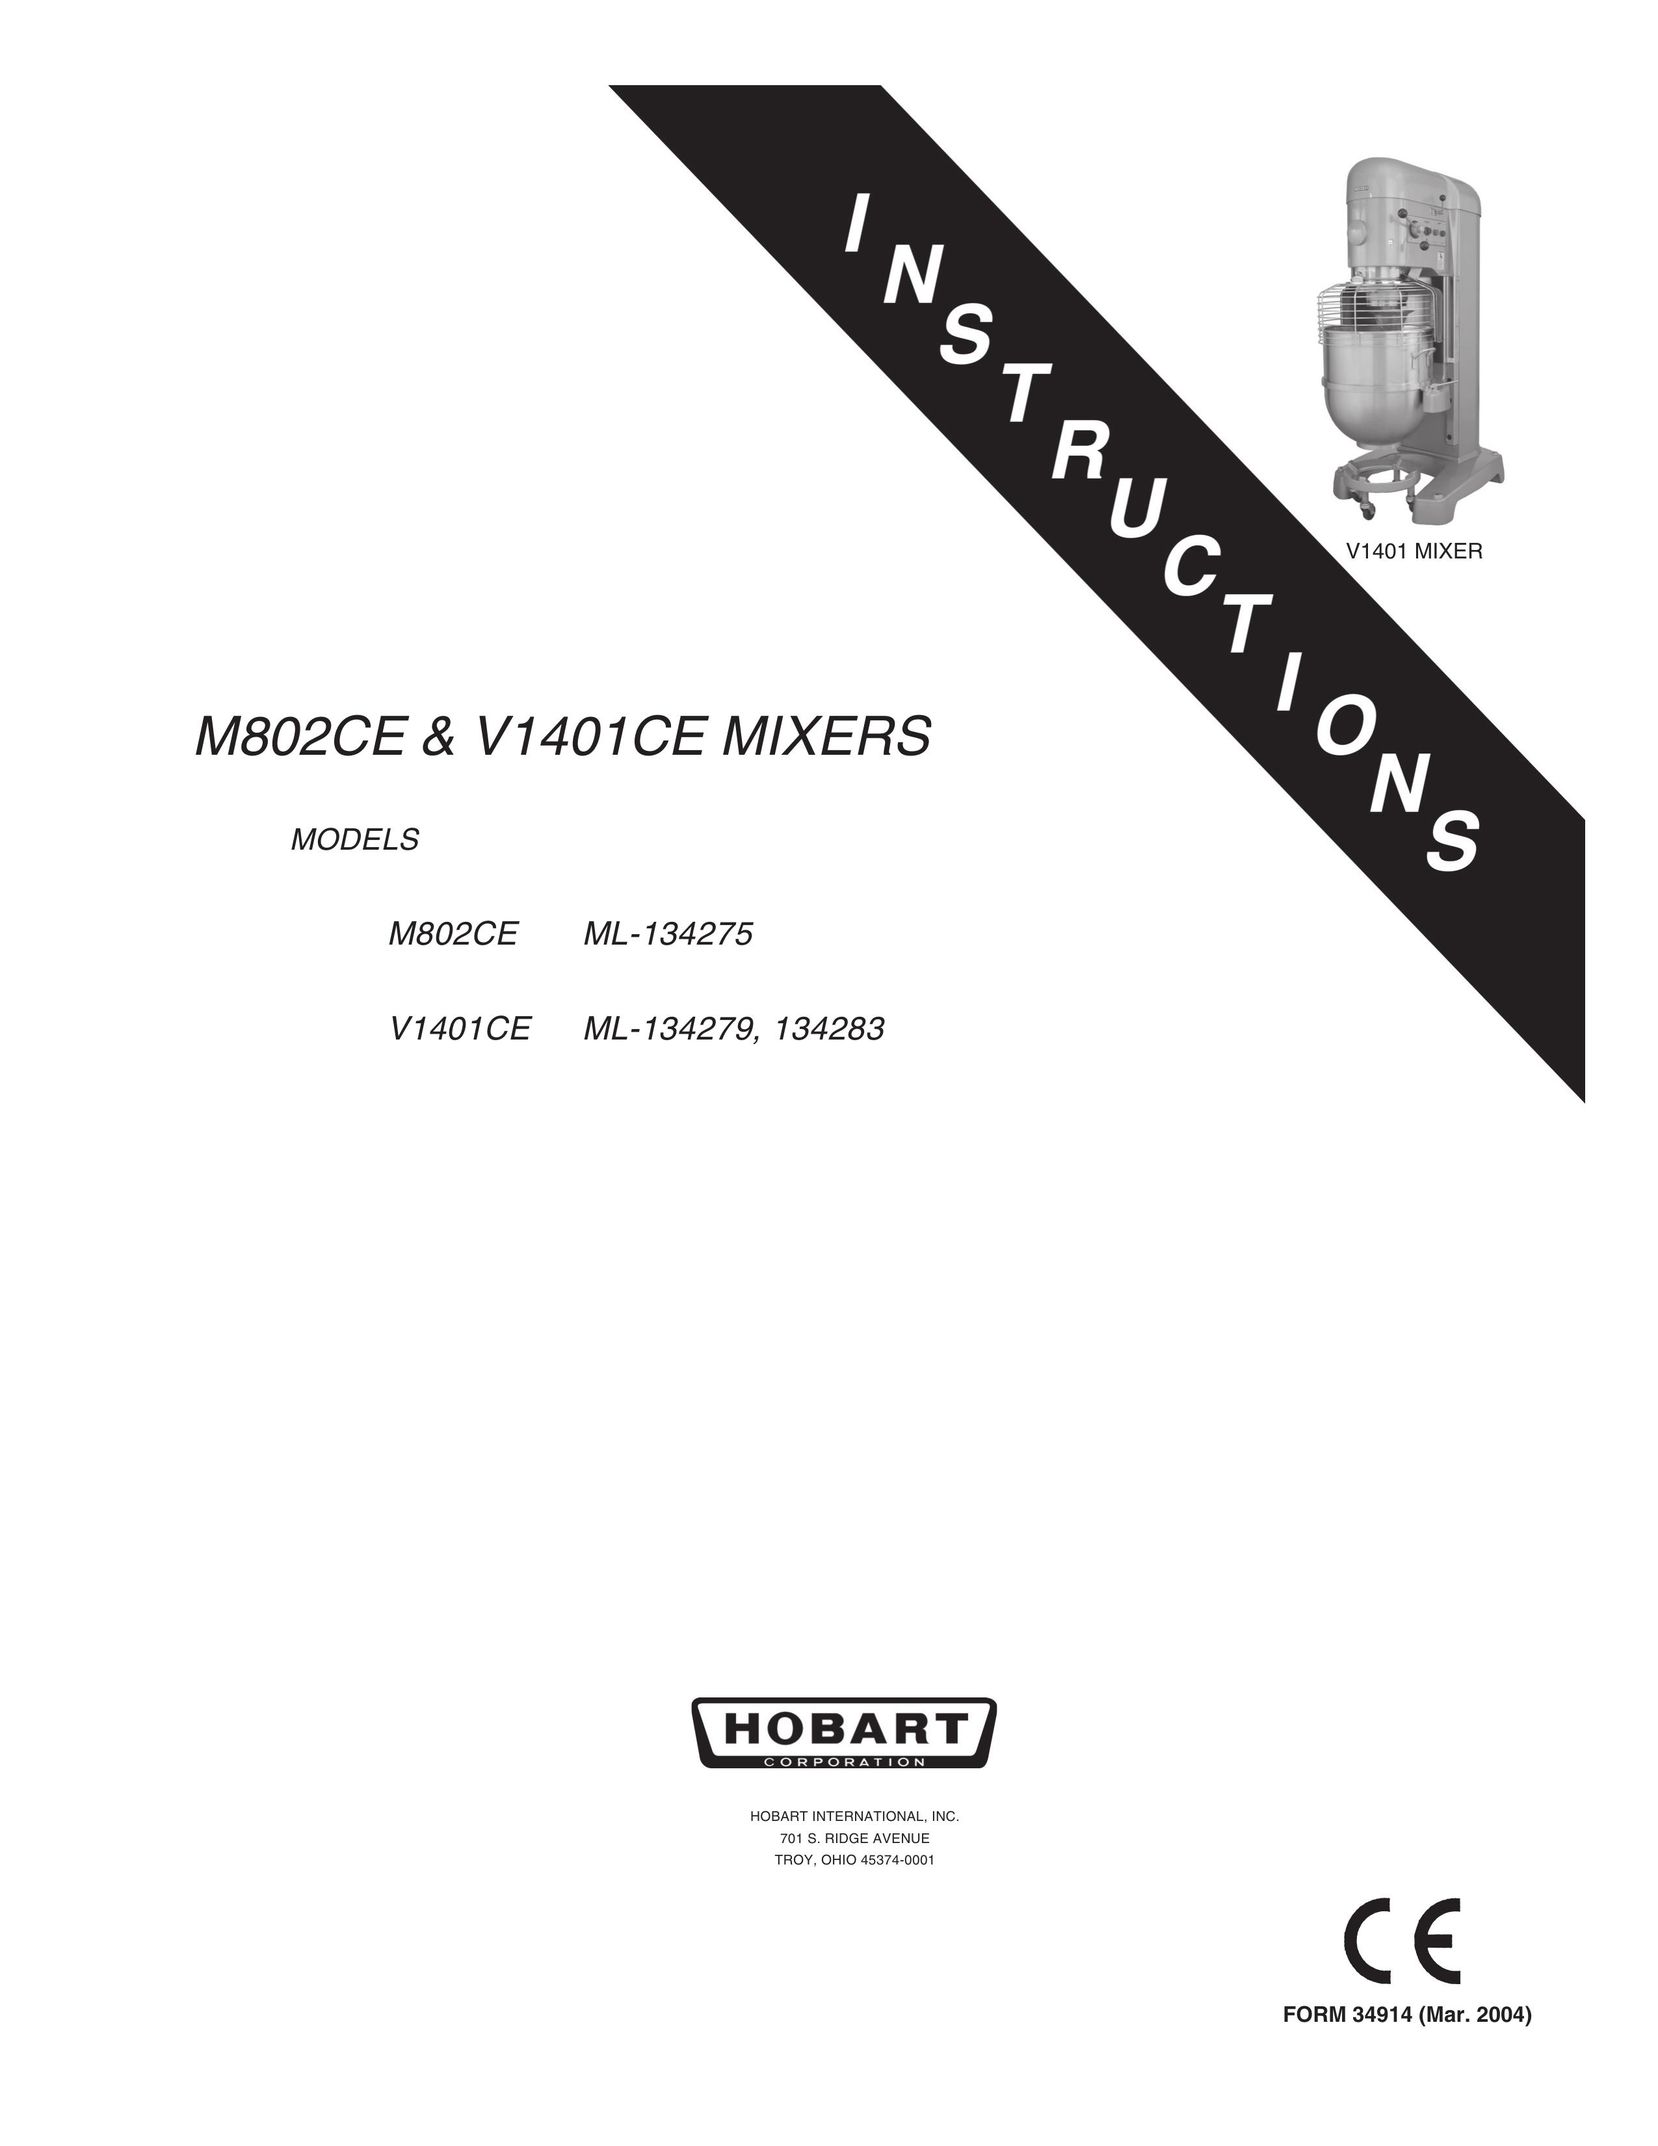 Hobart M802CE Mixer User Manual